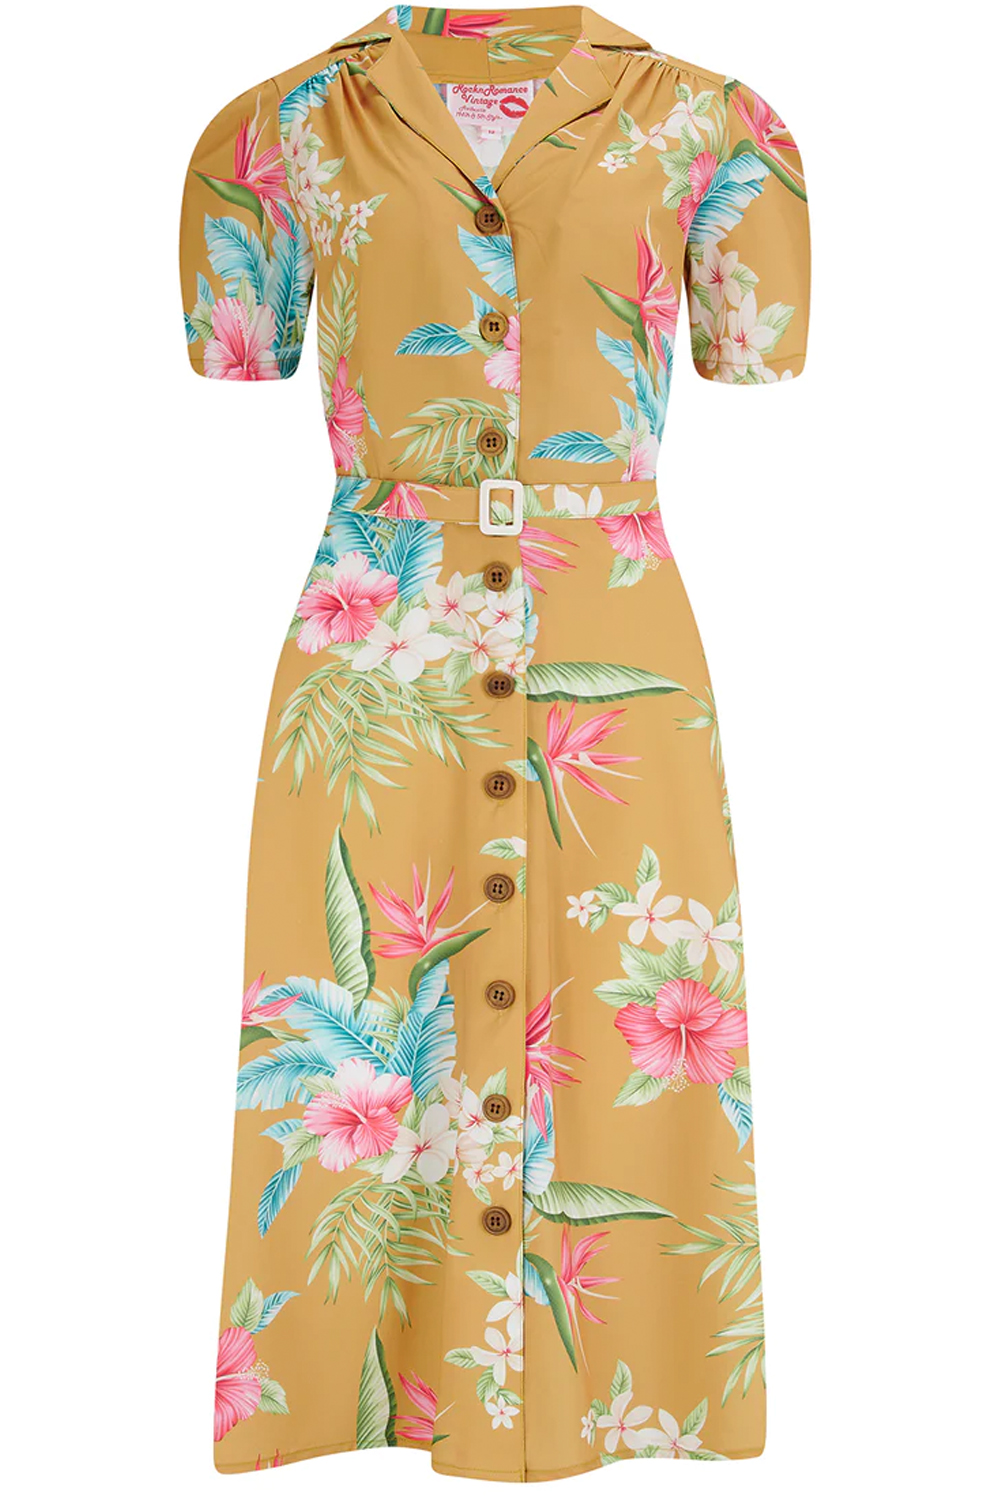 40er retro Hemdblusenkleid Hawaii Vintage Blüten Kleid senfgelb